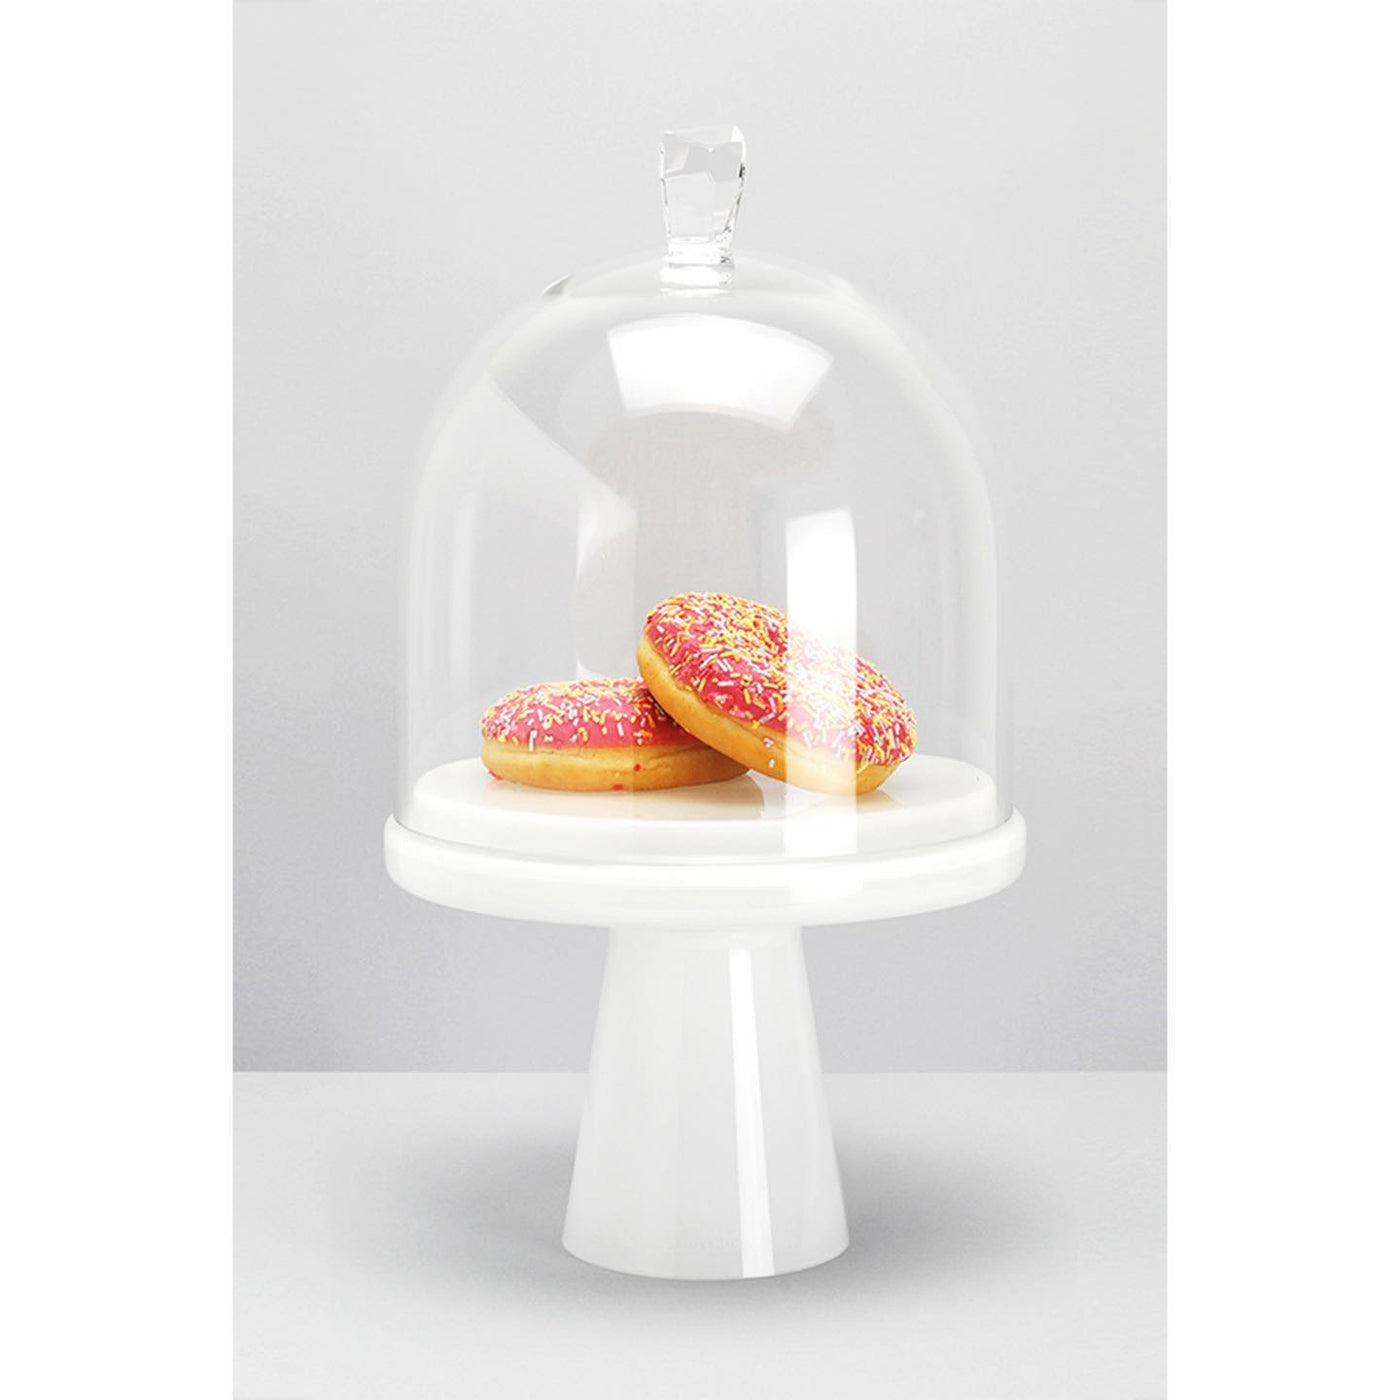 Small Glass Cake Stand by SUGAAR SUGAAR | Julia Moss Designs